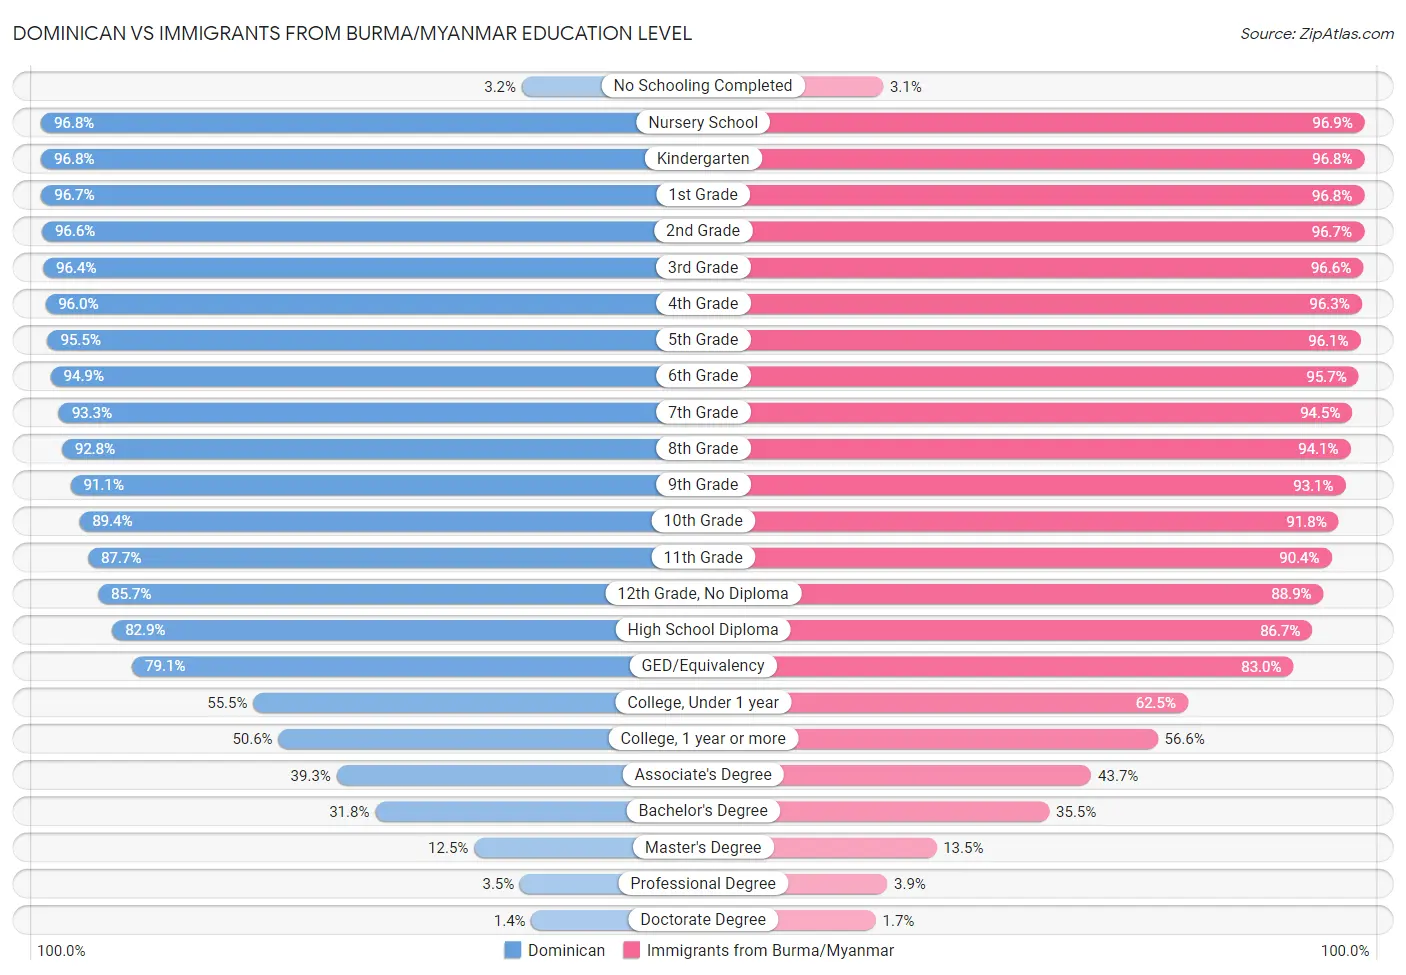 Dominican vs Immigrants from Burma/Myanmar Education Level